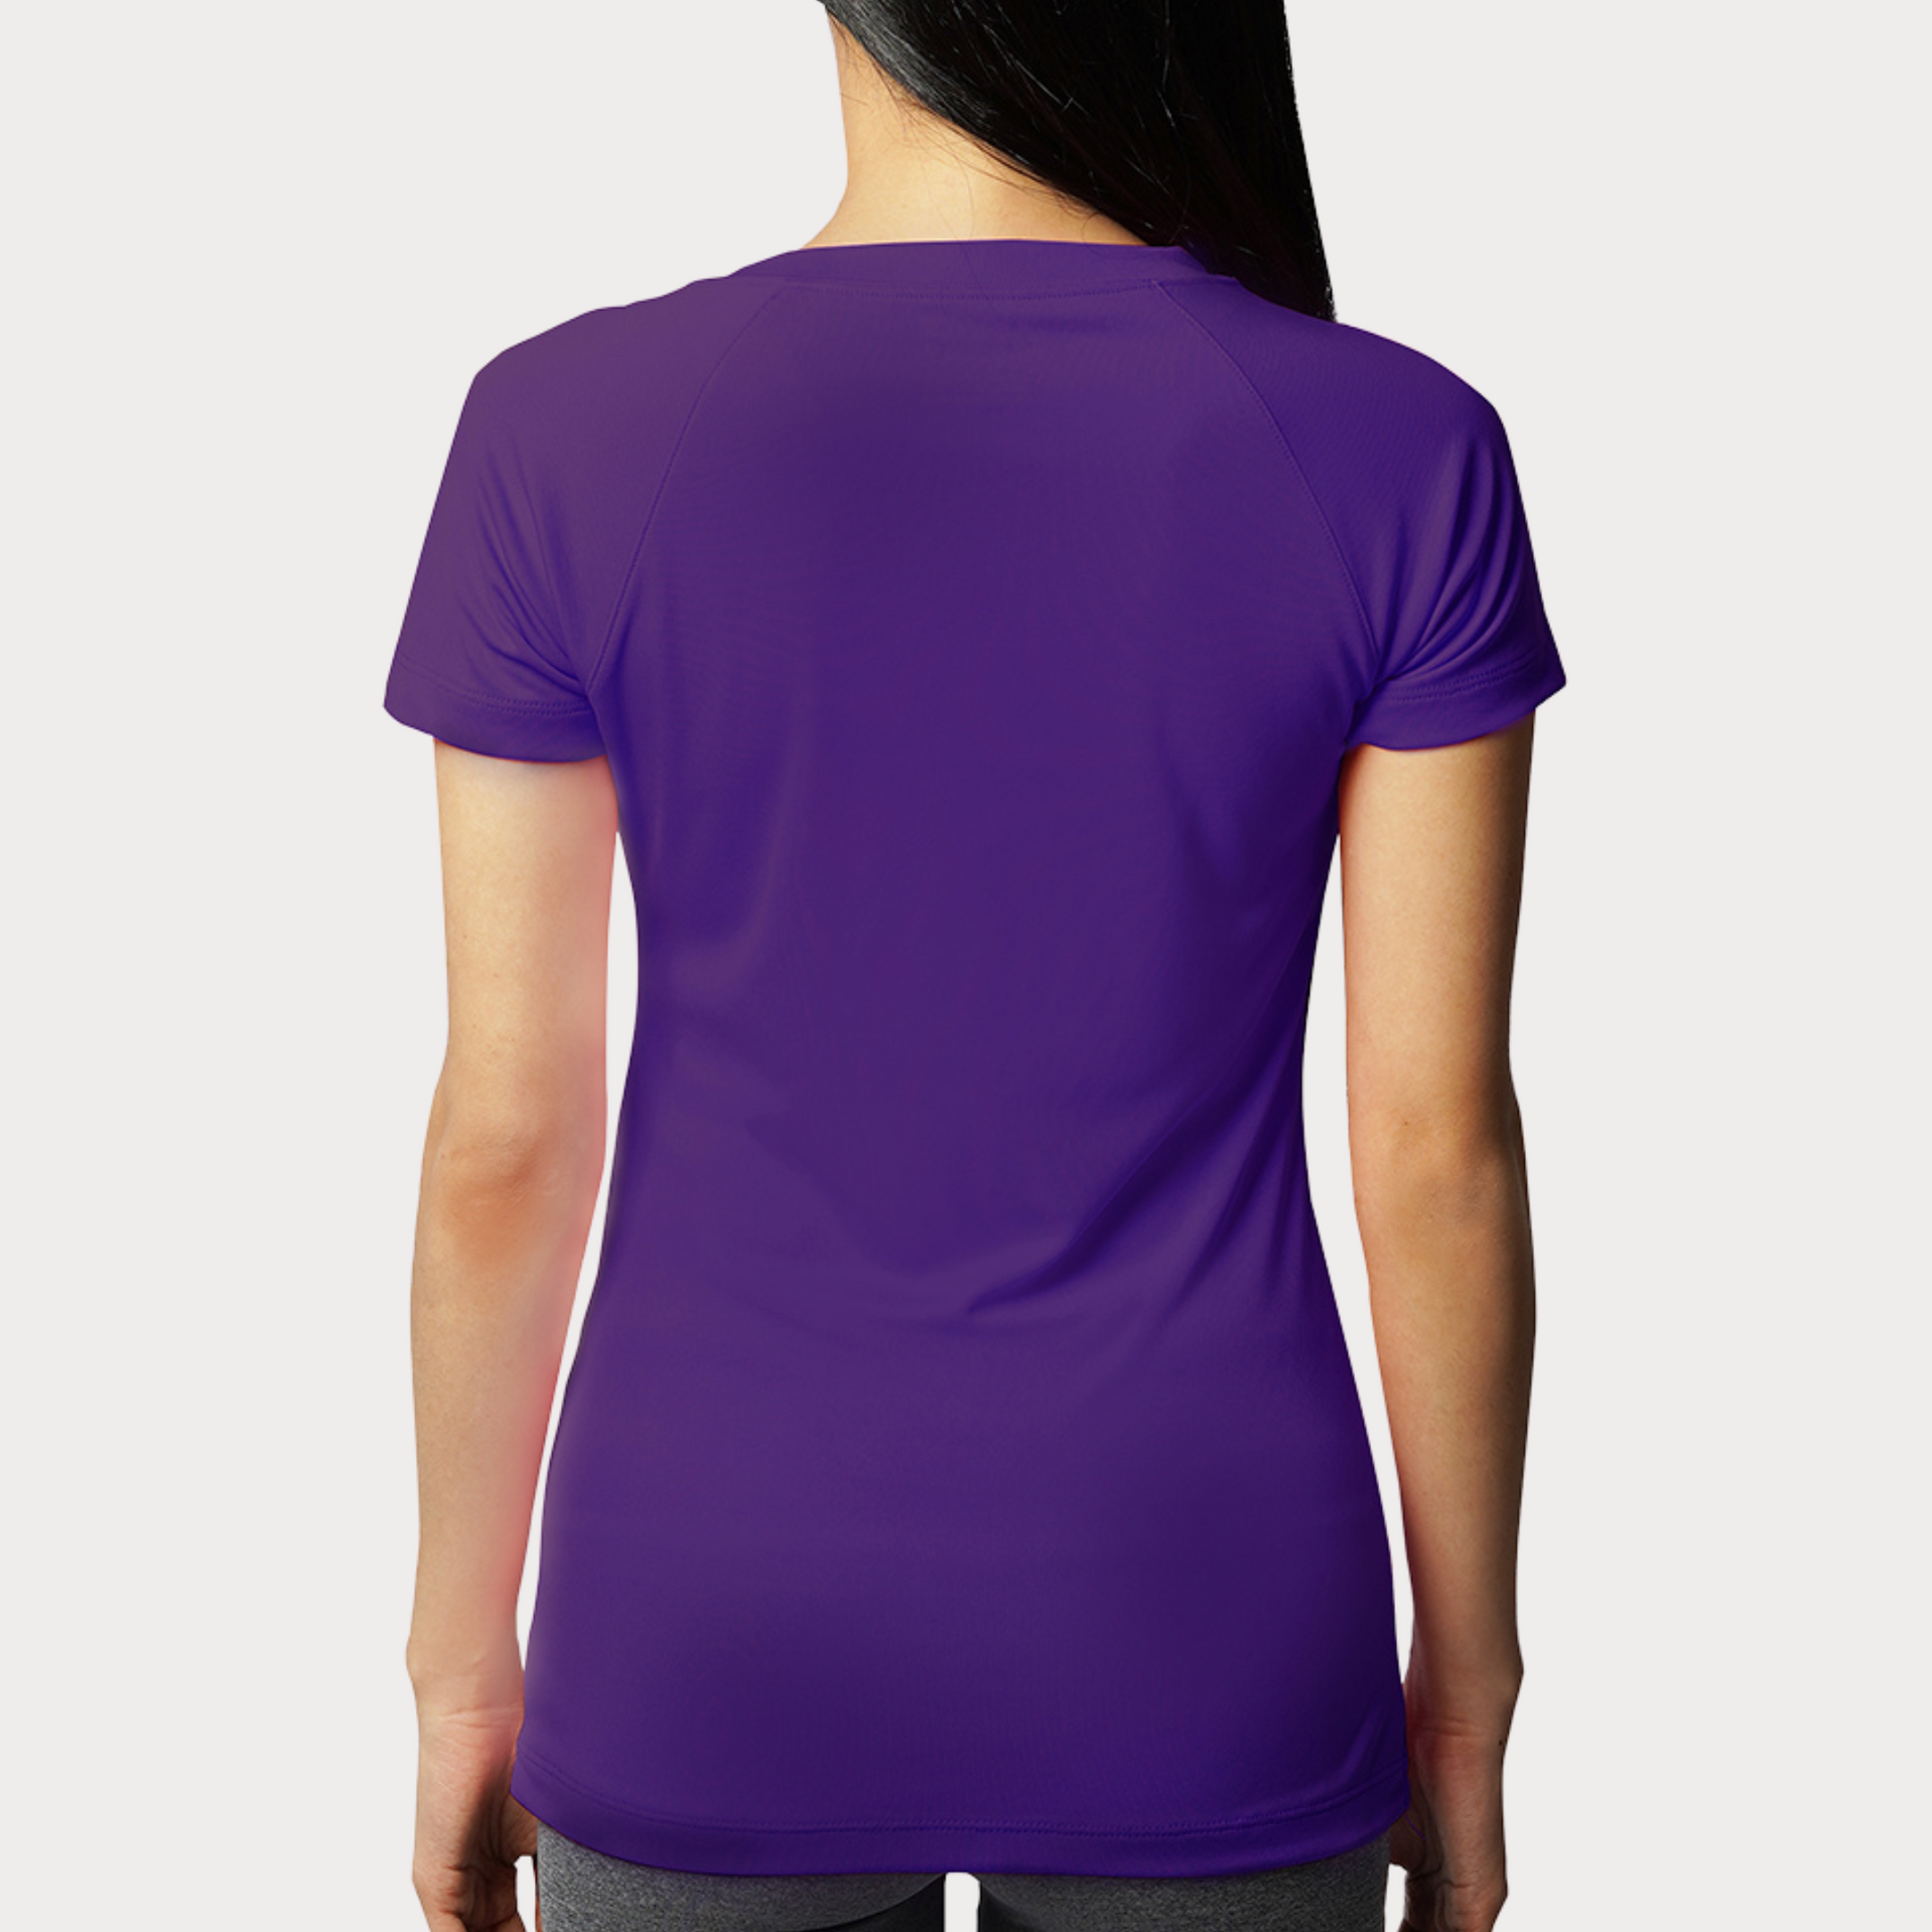 Short Sleeve Activewear / Sportswear - Women's Classic V-Neck Shirt - S / Violet - Outperformer